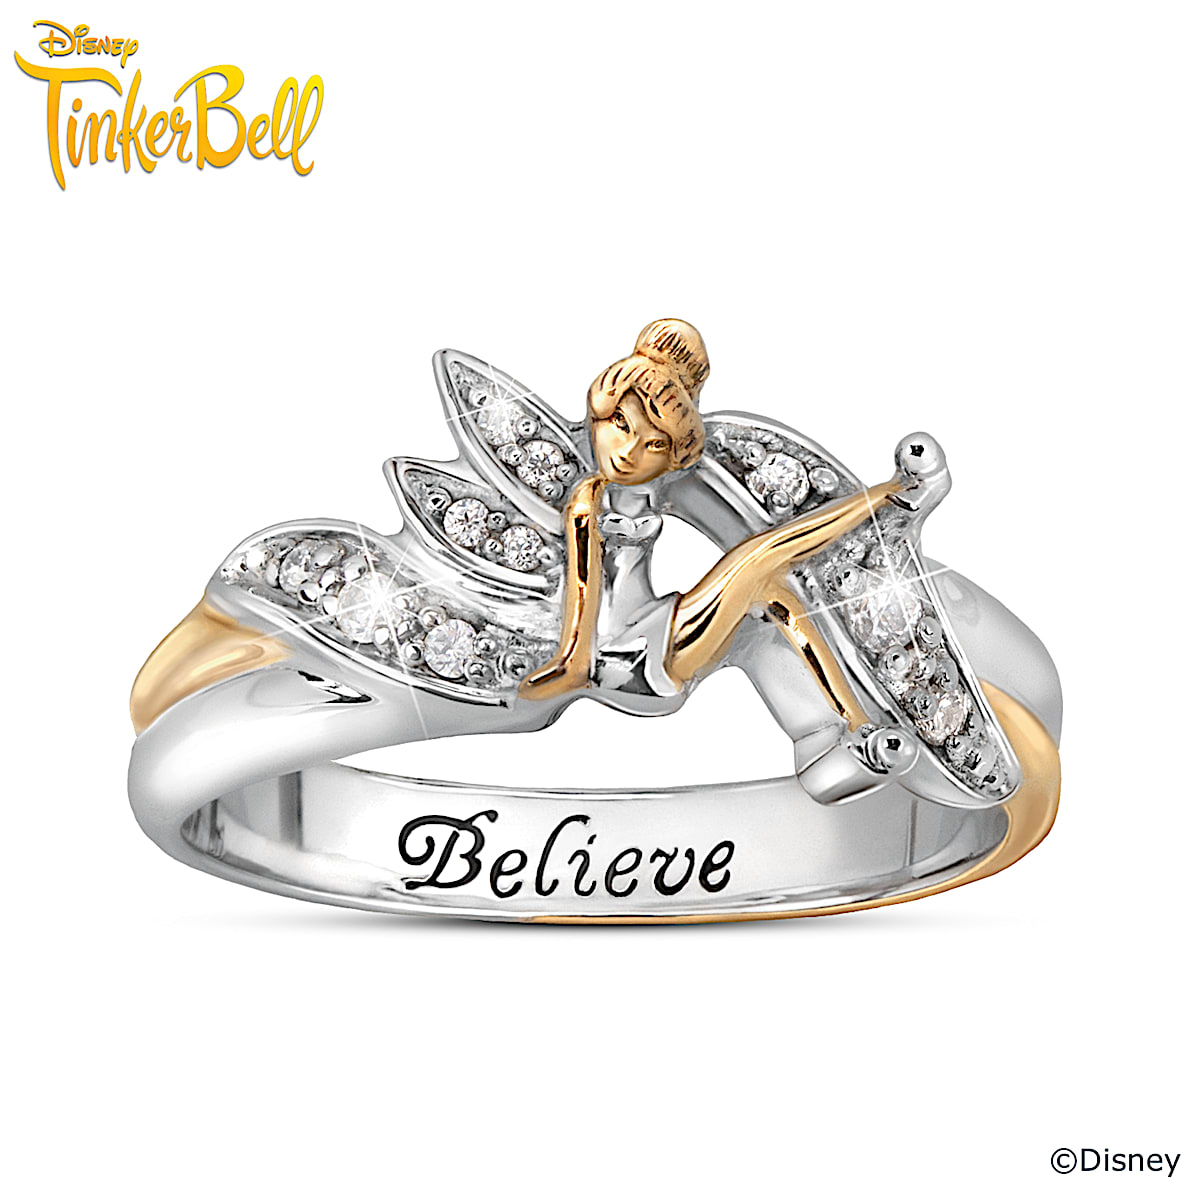 Disney Tinker Bell Sparkling Ring